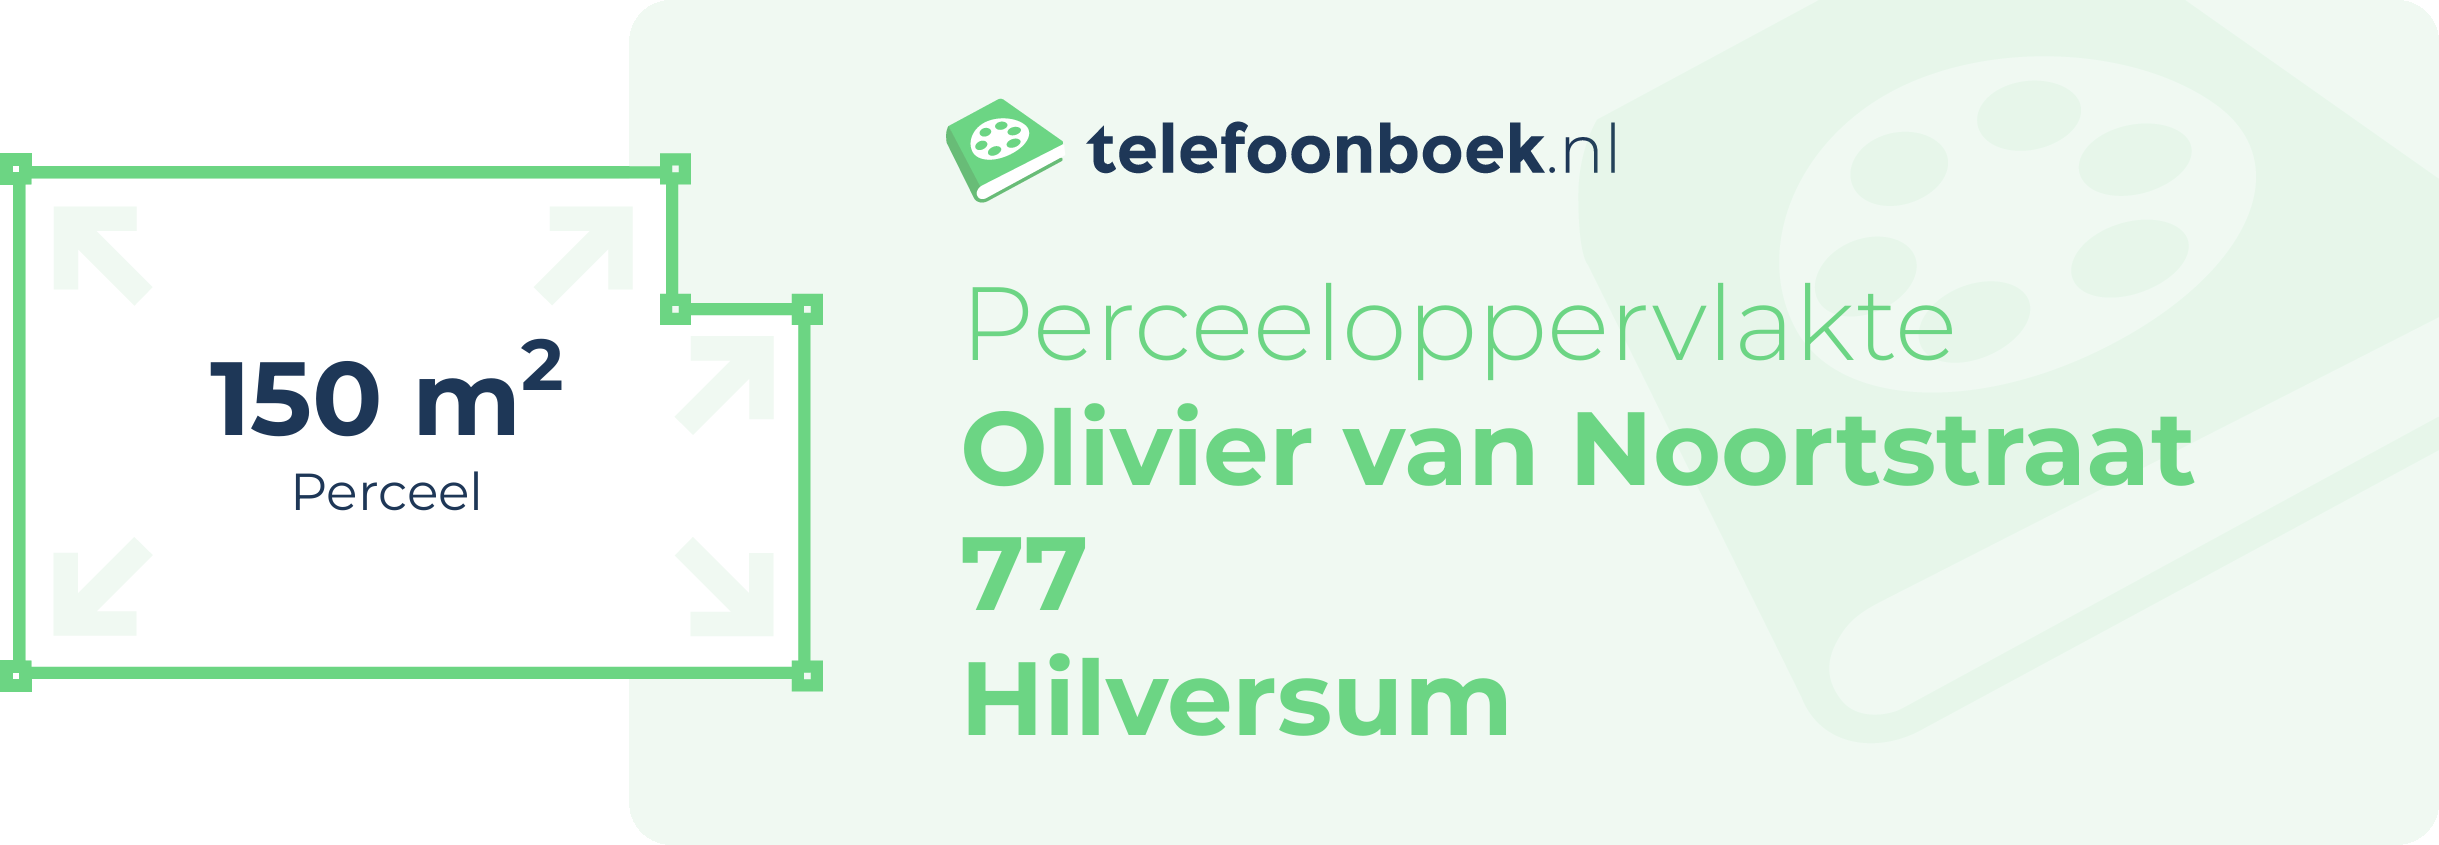 Perceeloppervlakte Olivier Van Noortstraat 77 Hilversum